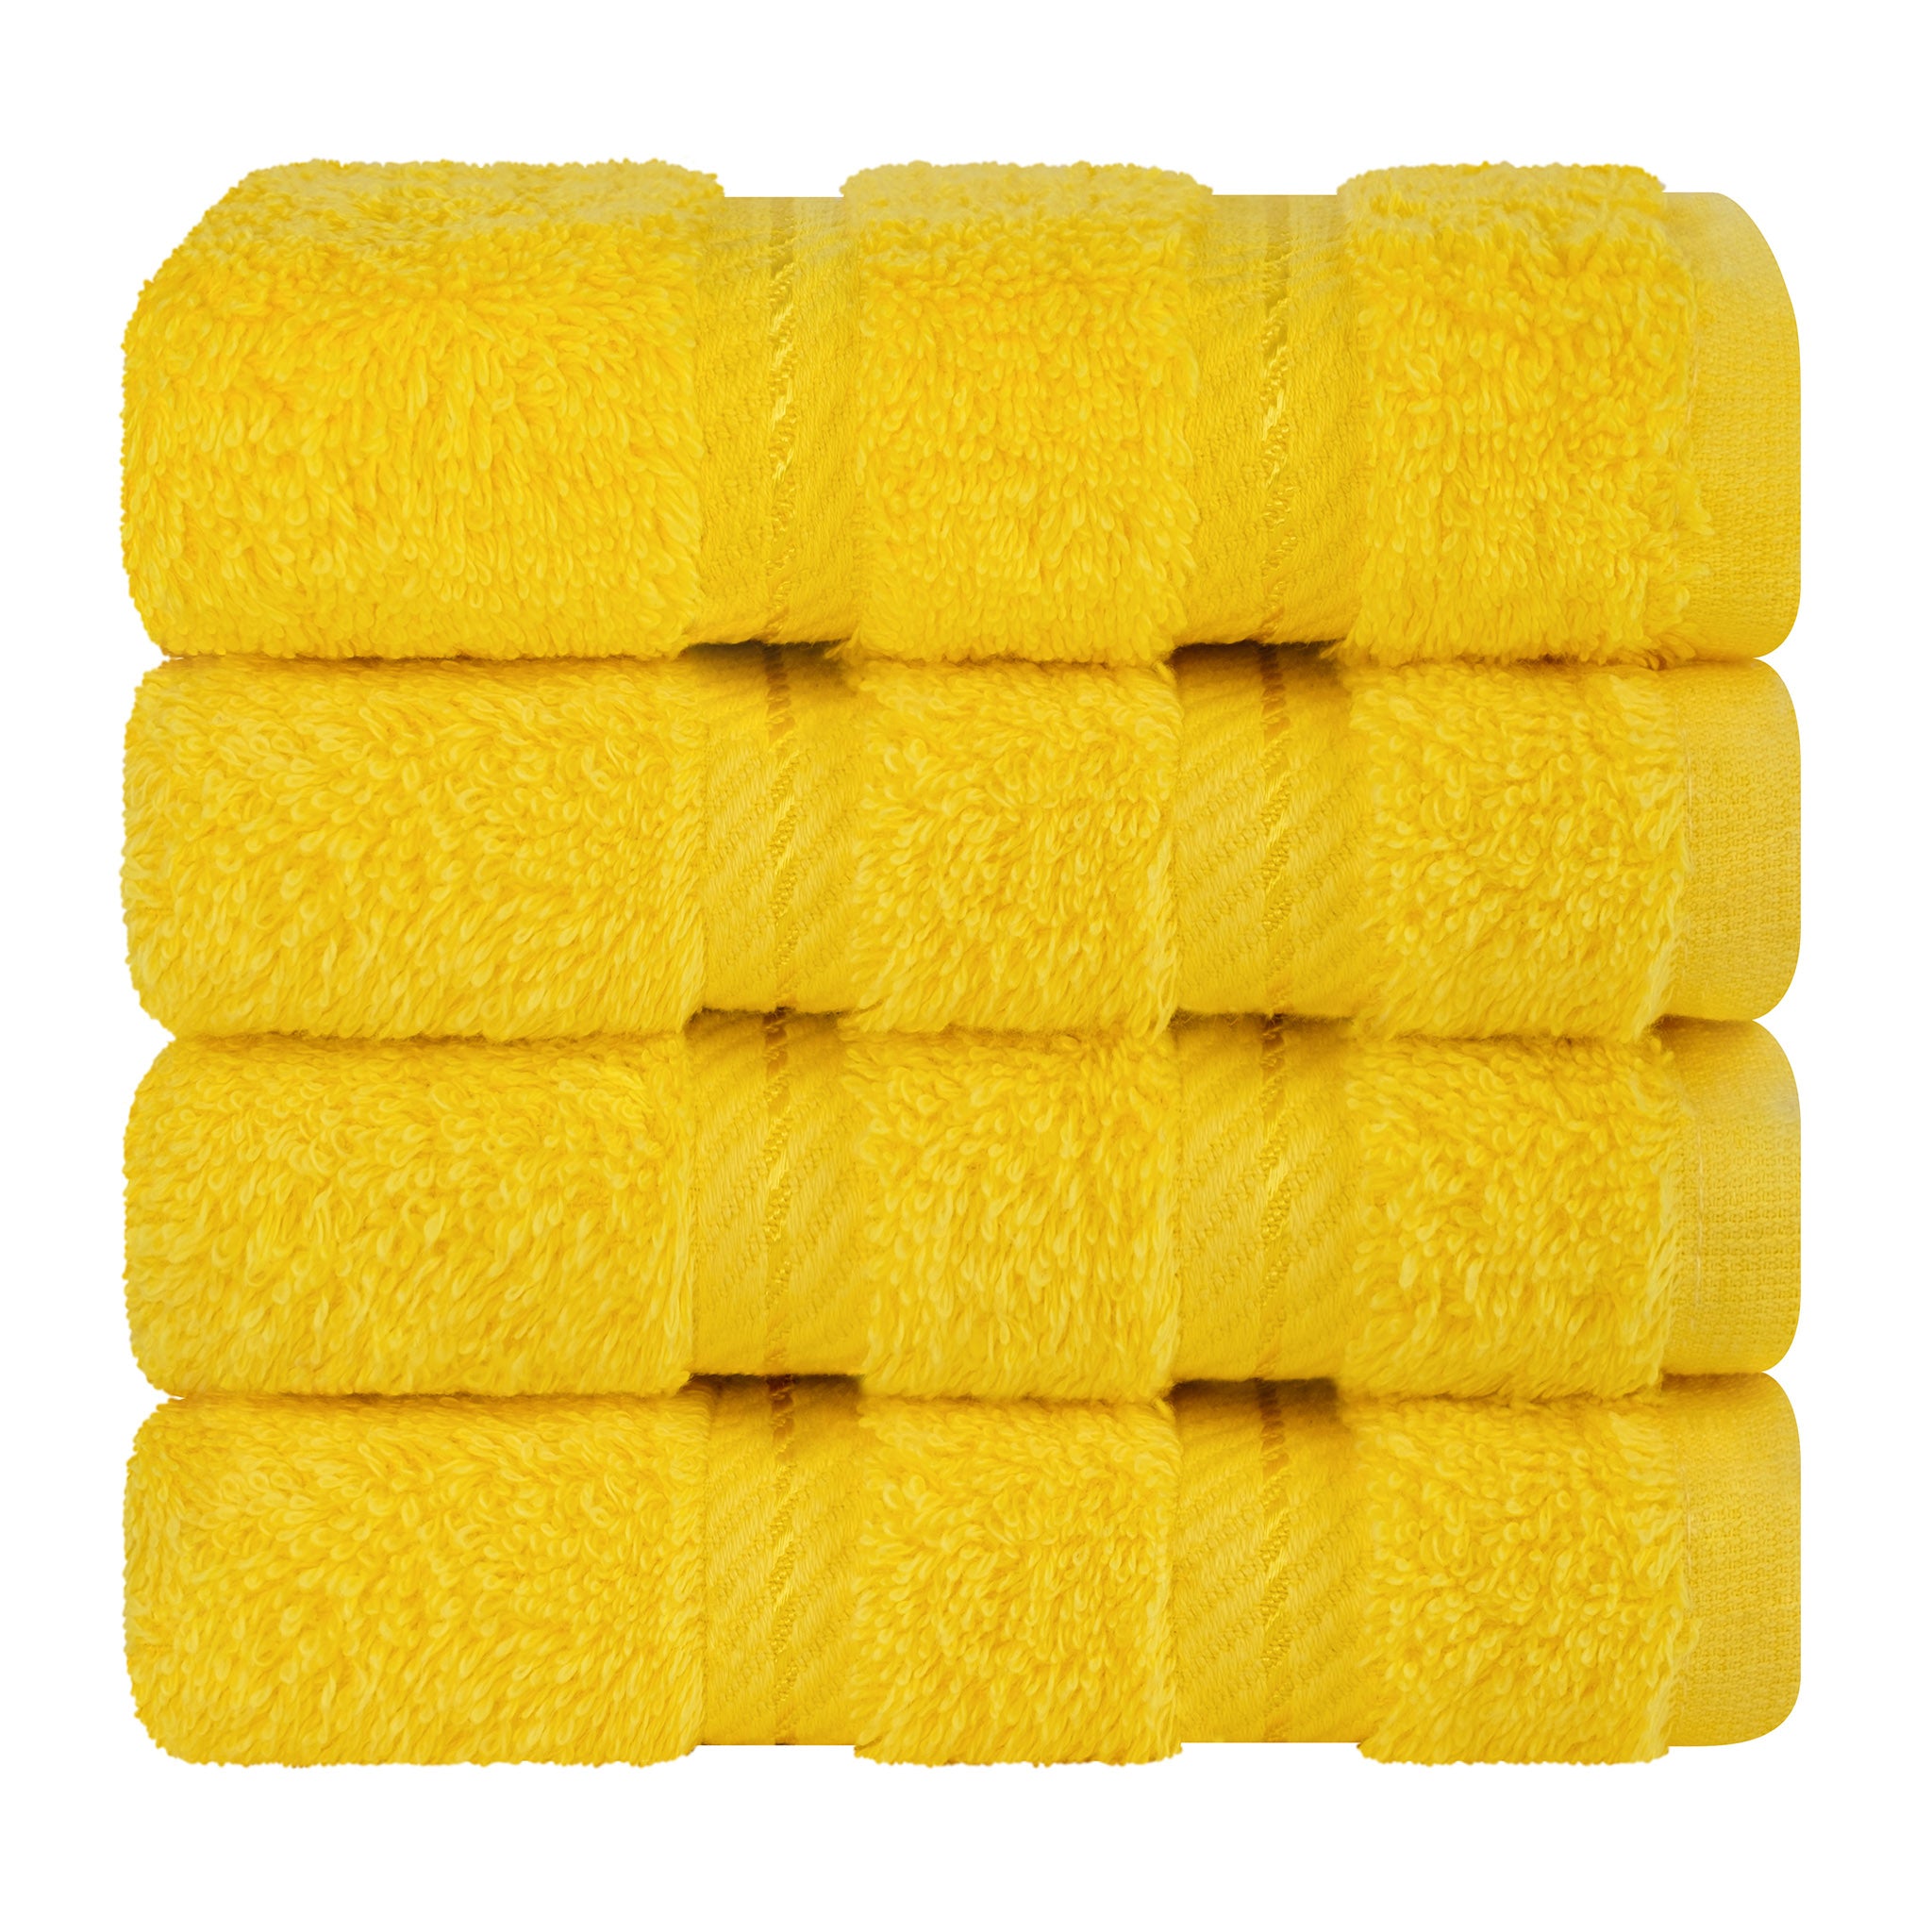  American Soft Linen 100% Turkish Cotton 4 Piece Washcloth Set - Wholesale - yellow-7